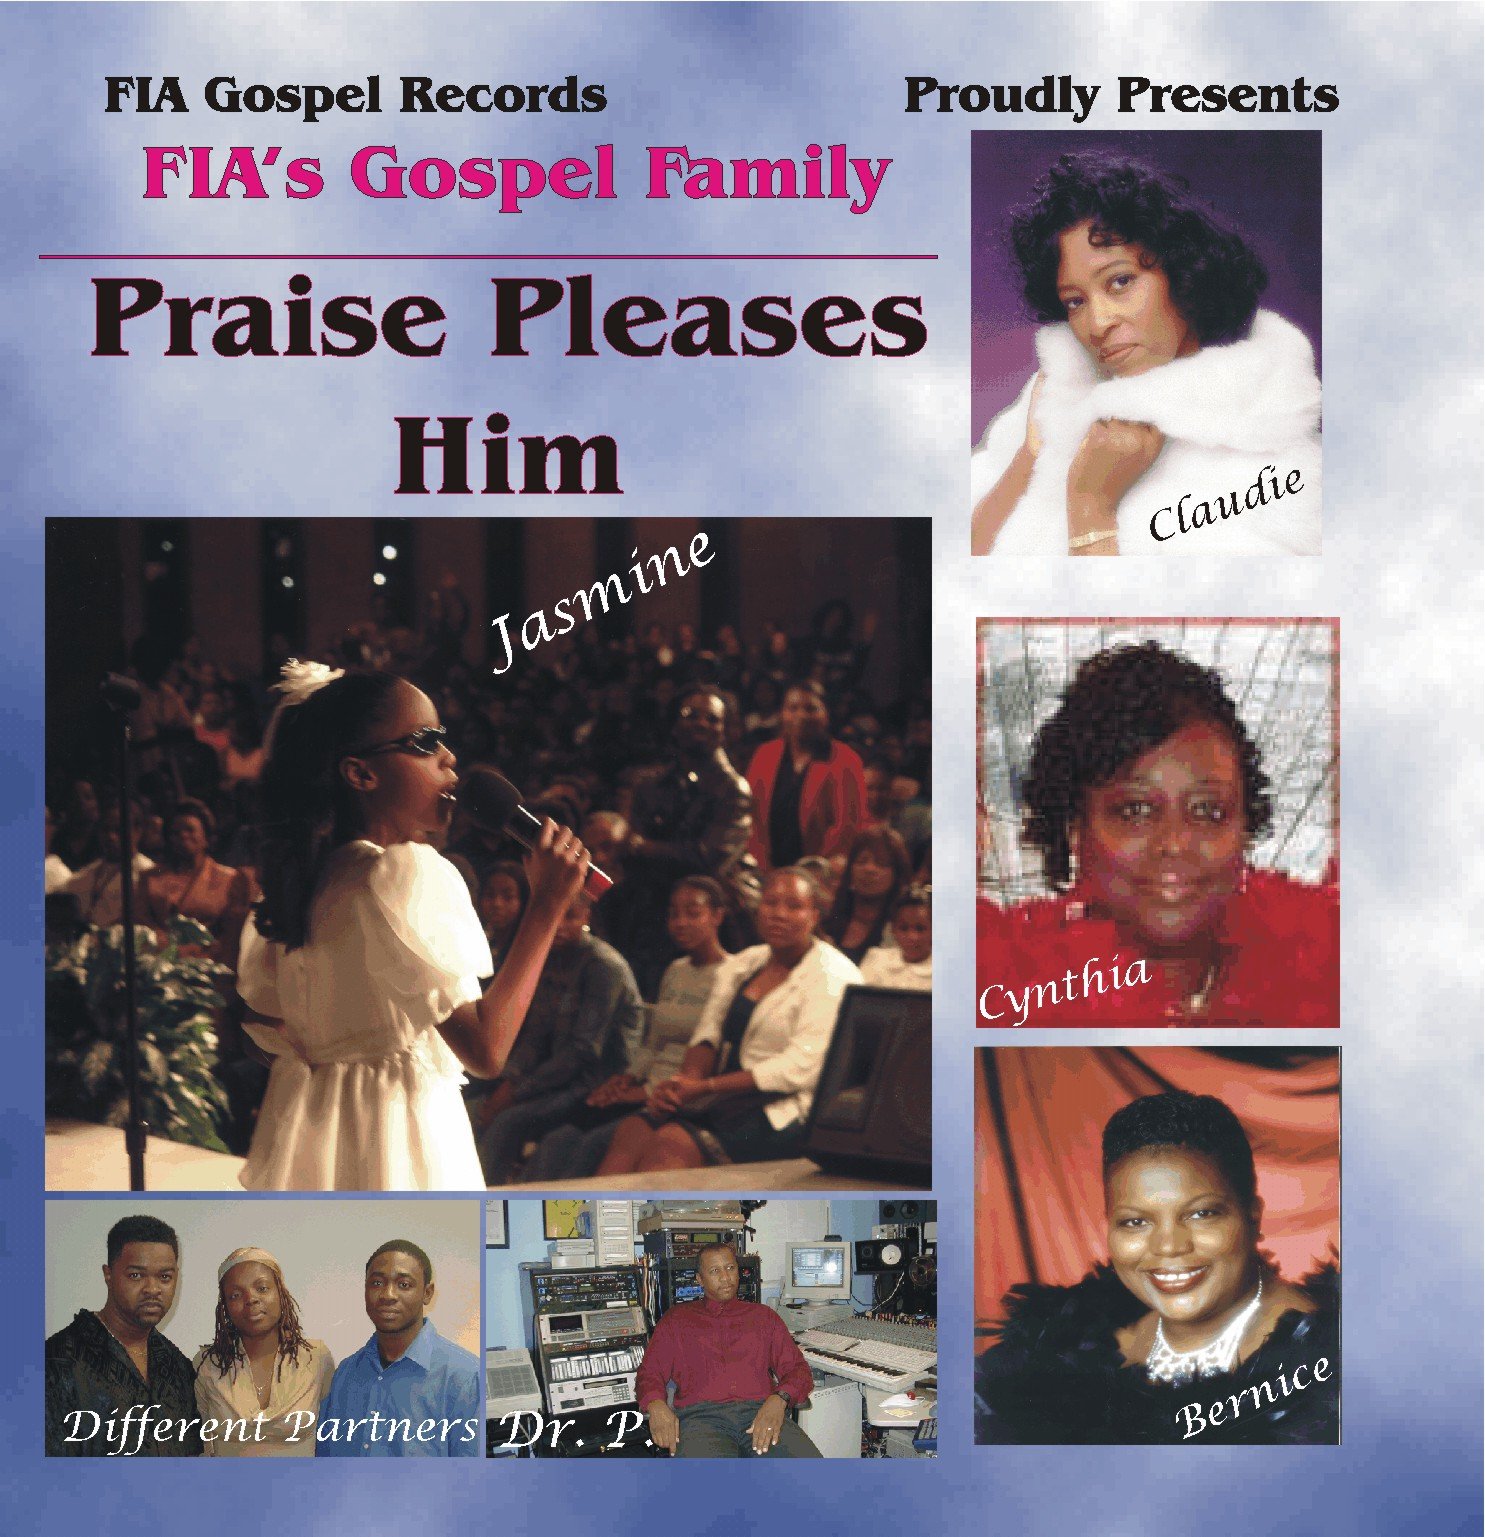 FIA Gospel Artists: Praise Pleases Him